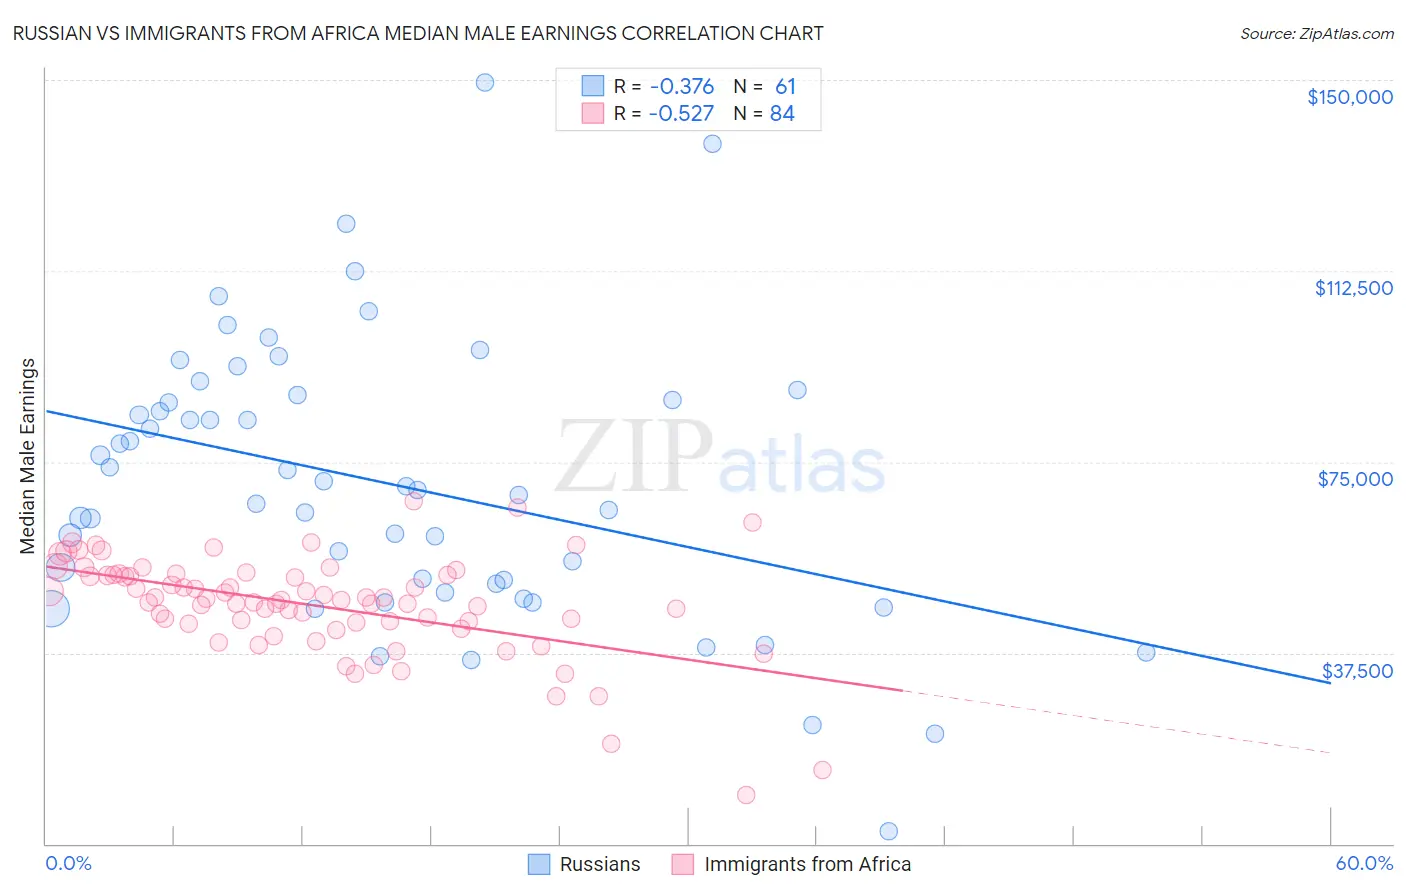 Russian vs Immigrants from Africa Median Male Earnings